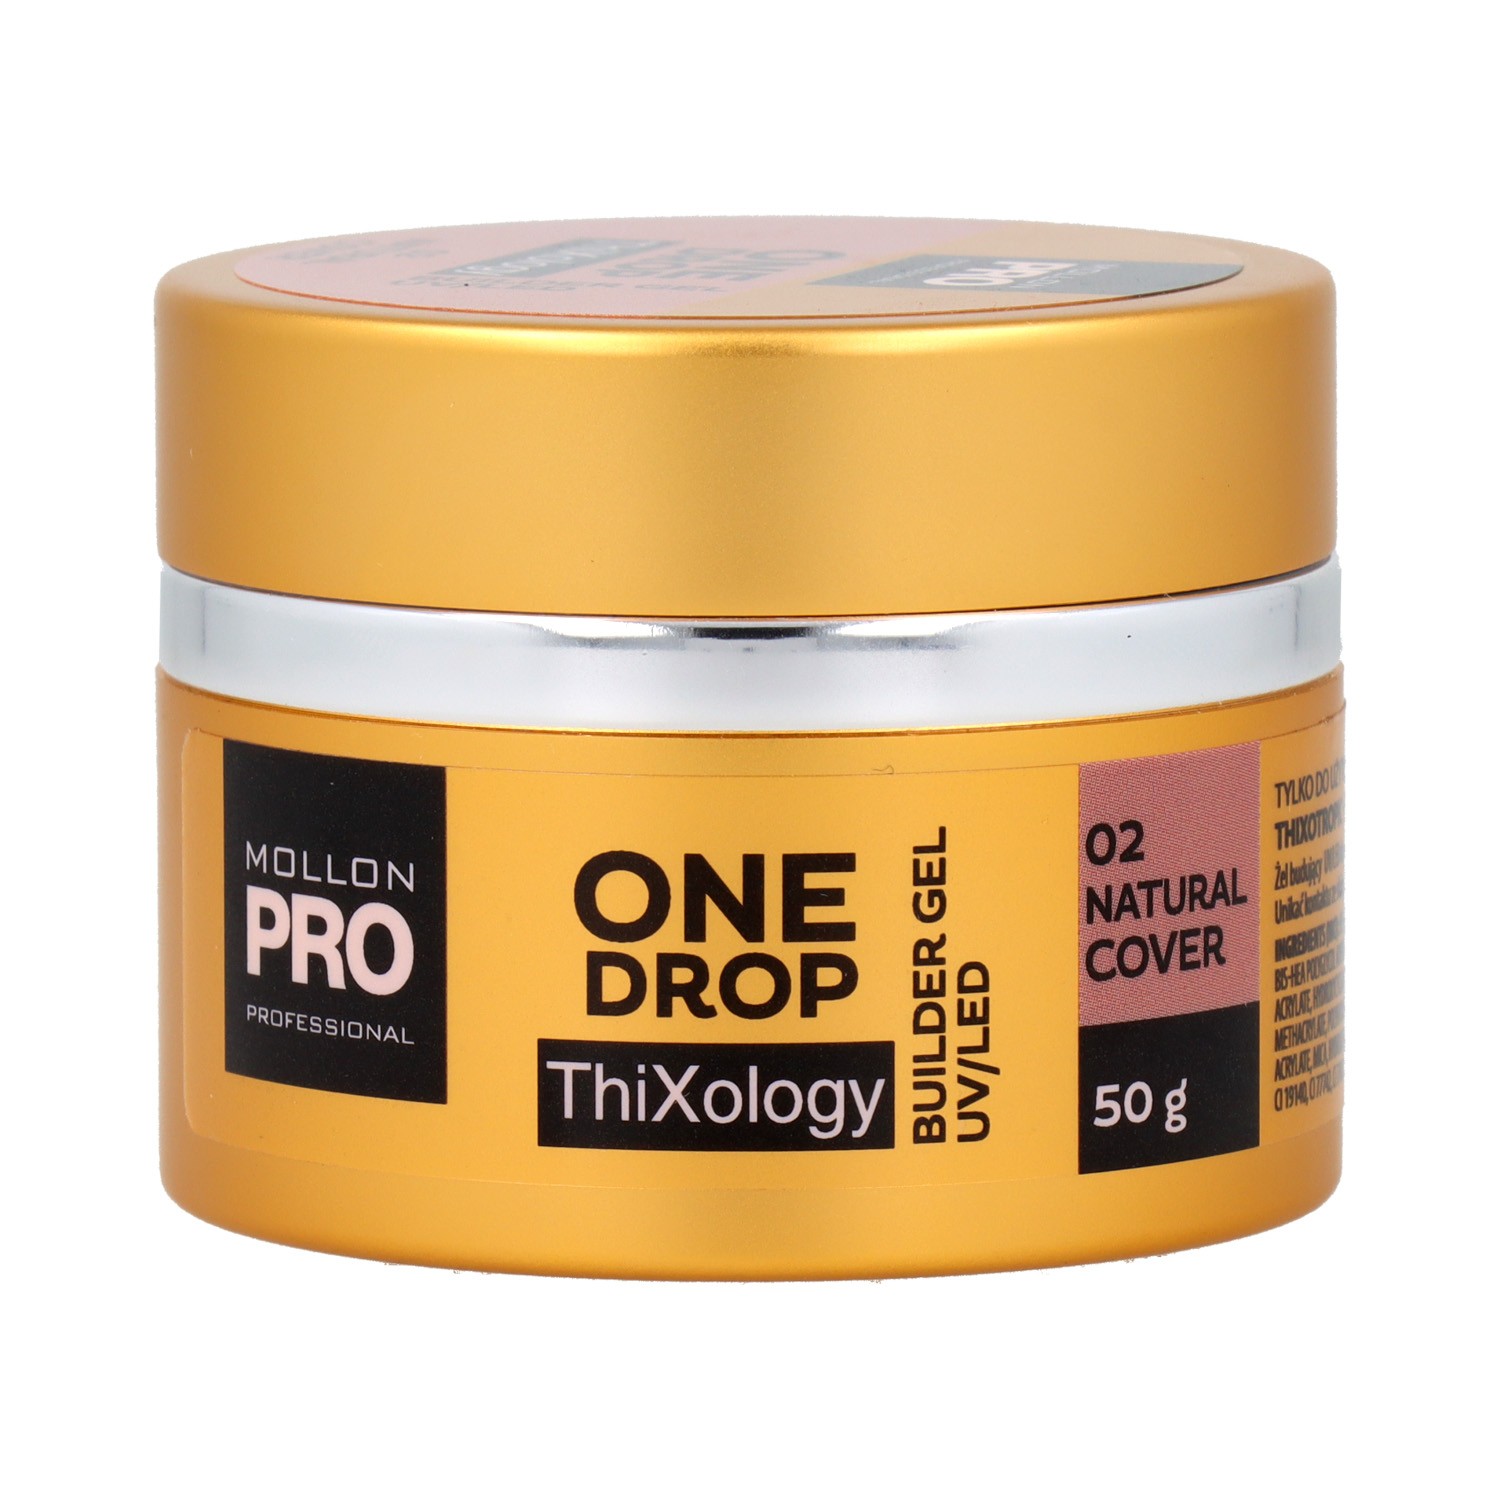 Mollon Pro One Drop Thixology Gel 02 Natural Cover 50 gr